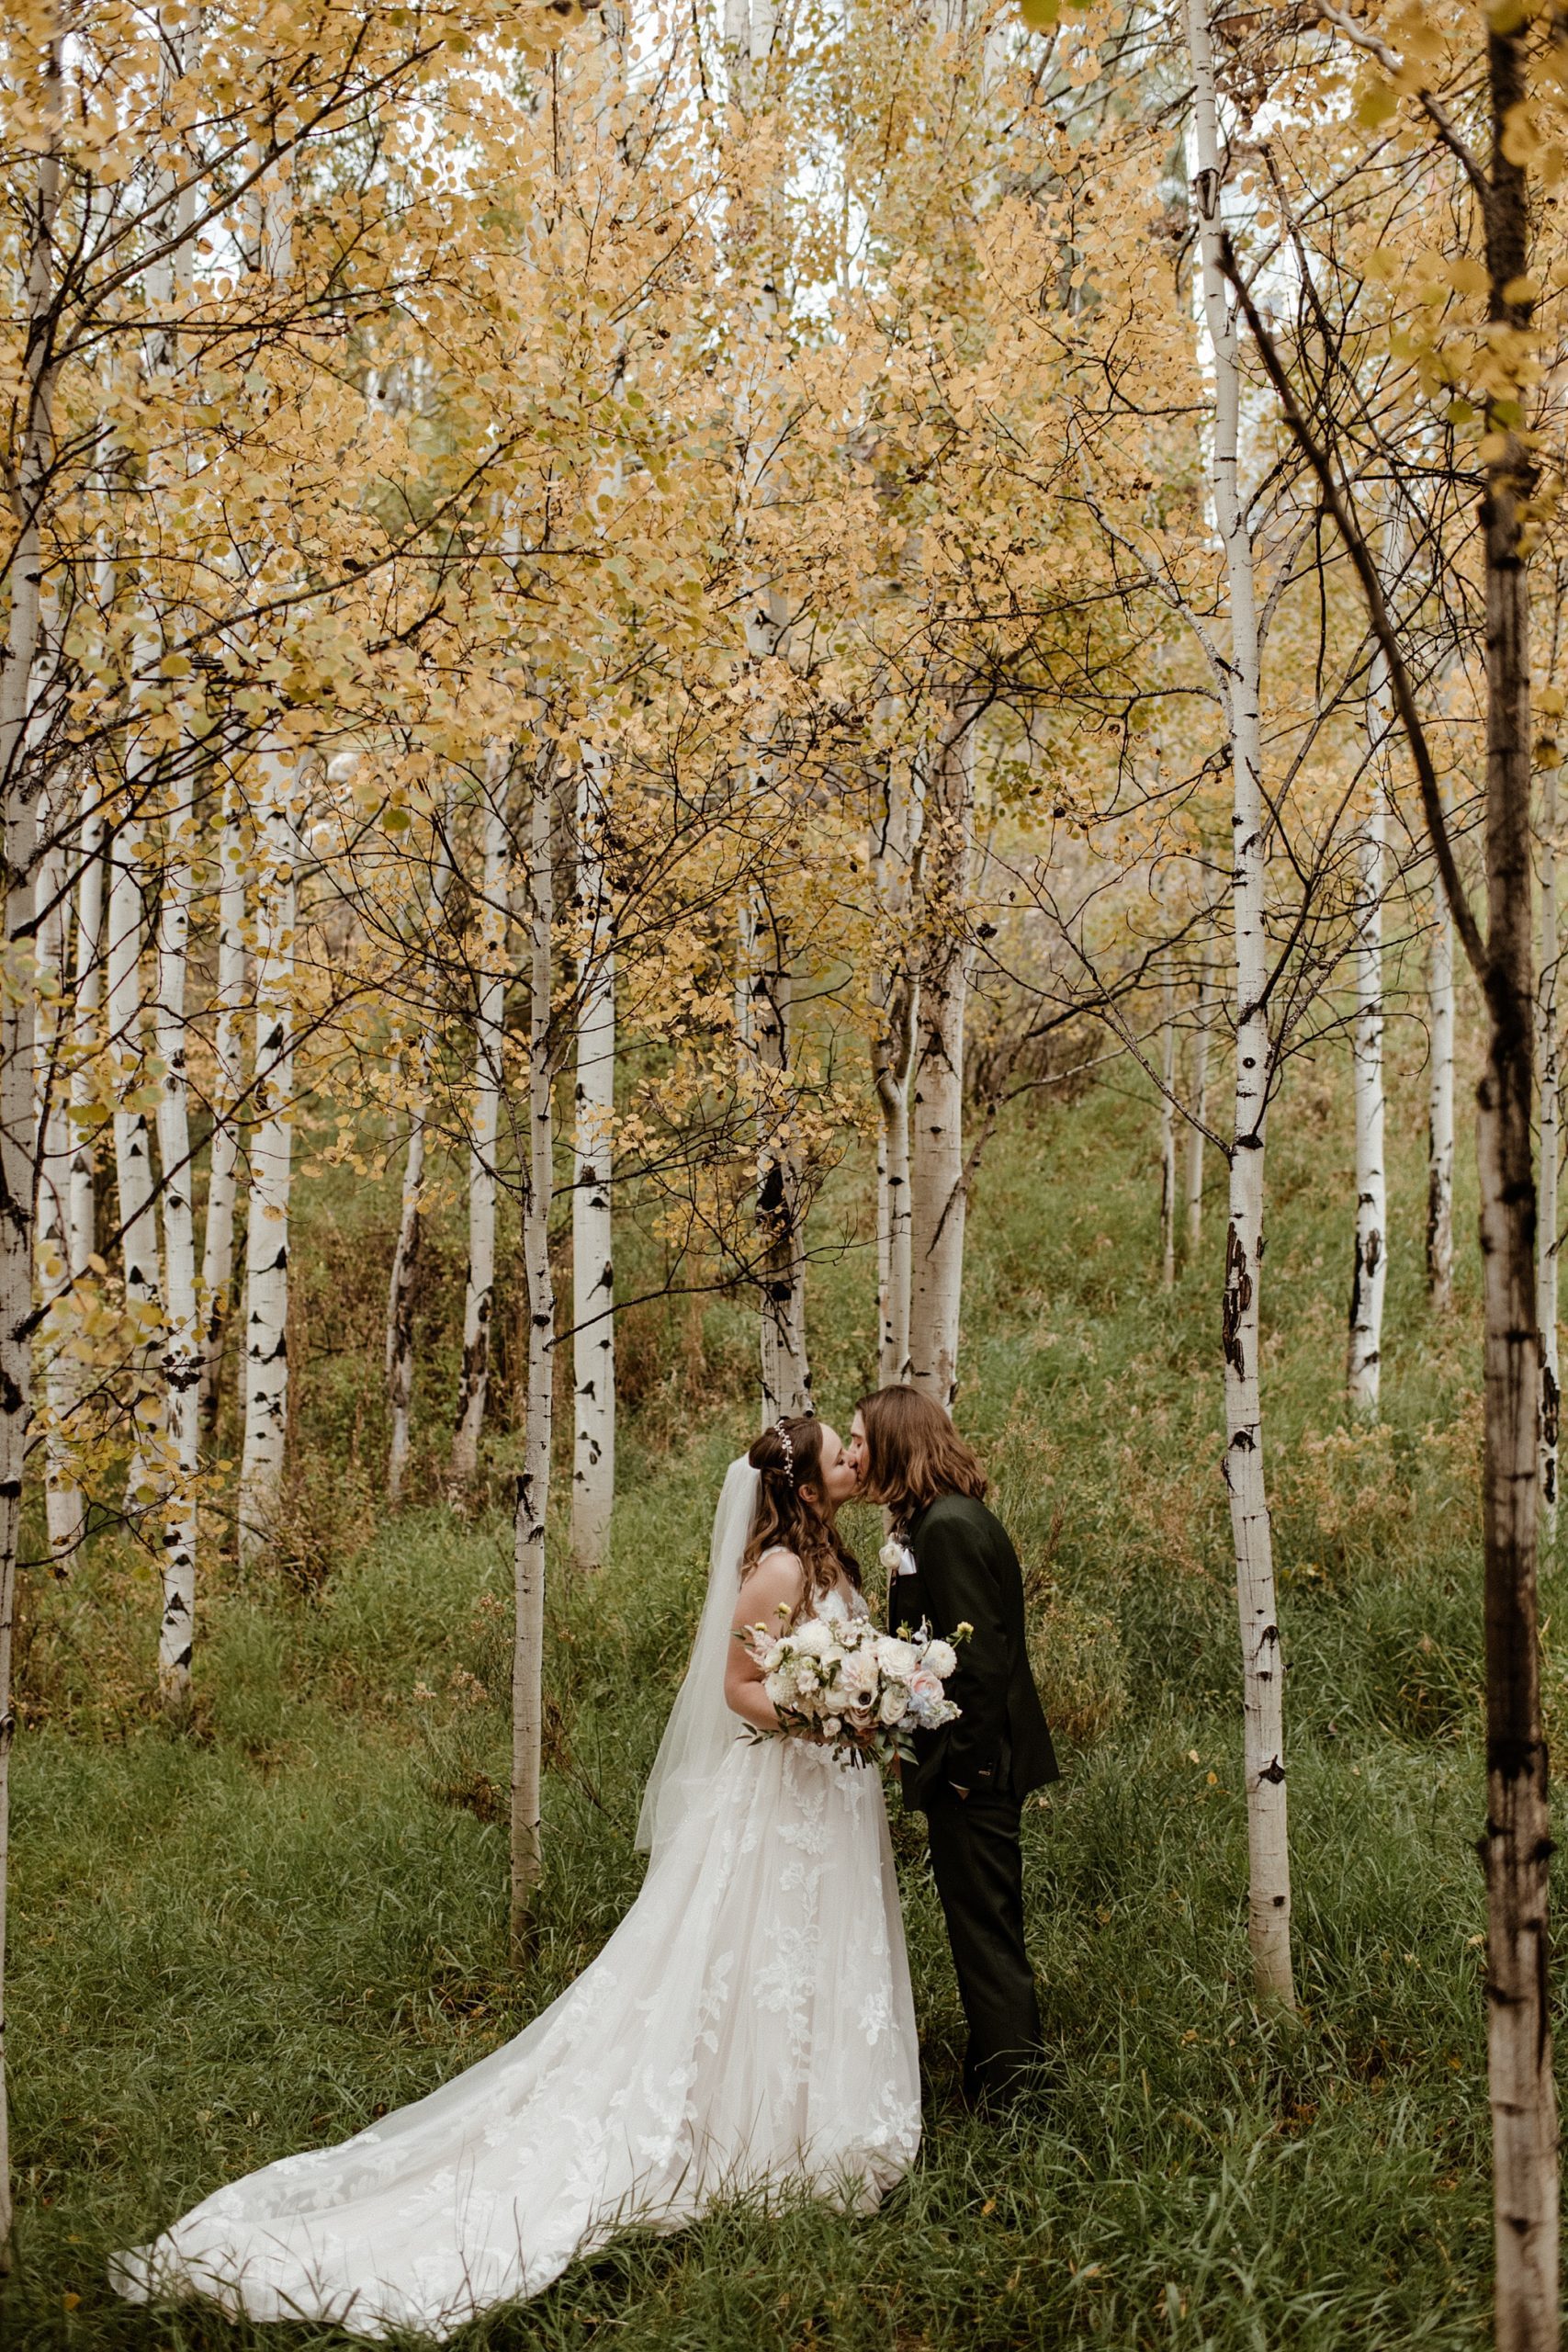 A bride and groom walk among the aspens at Aspen Meadows Resort